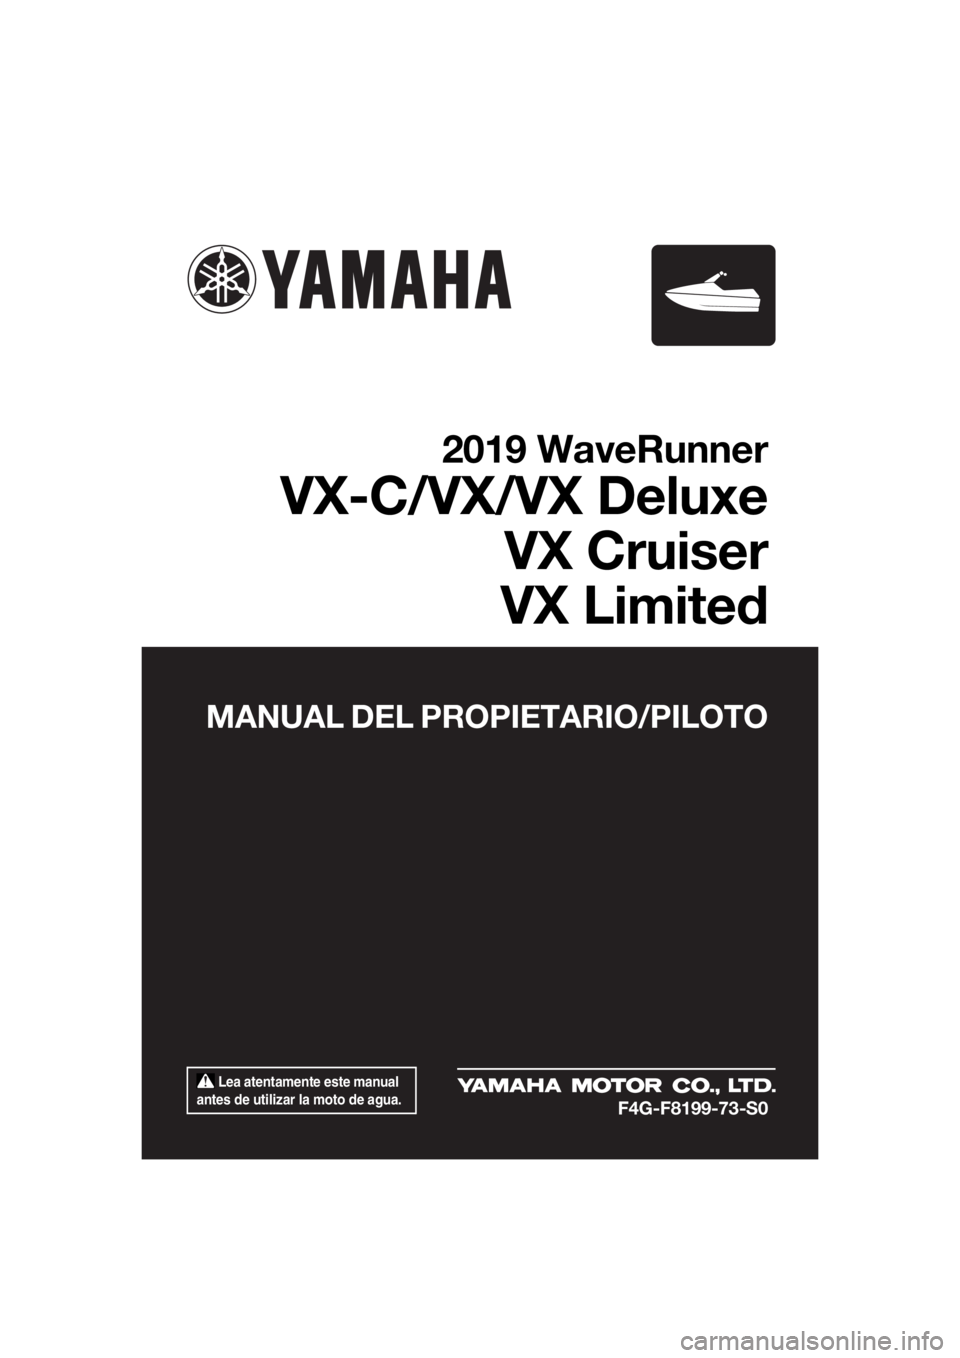 YAMAHA VX LIMITED 2019  Manuale de Empleo (in Spanish)  Lea atentamente este manual 
antes de utilizar la moto de agua.
MANUAL DEL PROPIETARIO/PILOTO
2019 WaveRunner
VX-C/VX/VX Deluxe
VX Cruiser
VX Limited
F4G-F8199-73-S0
UF4G73S0.book  Page 1  Thursday, 